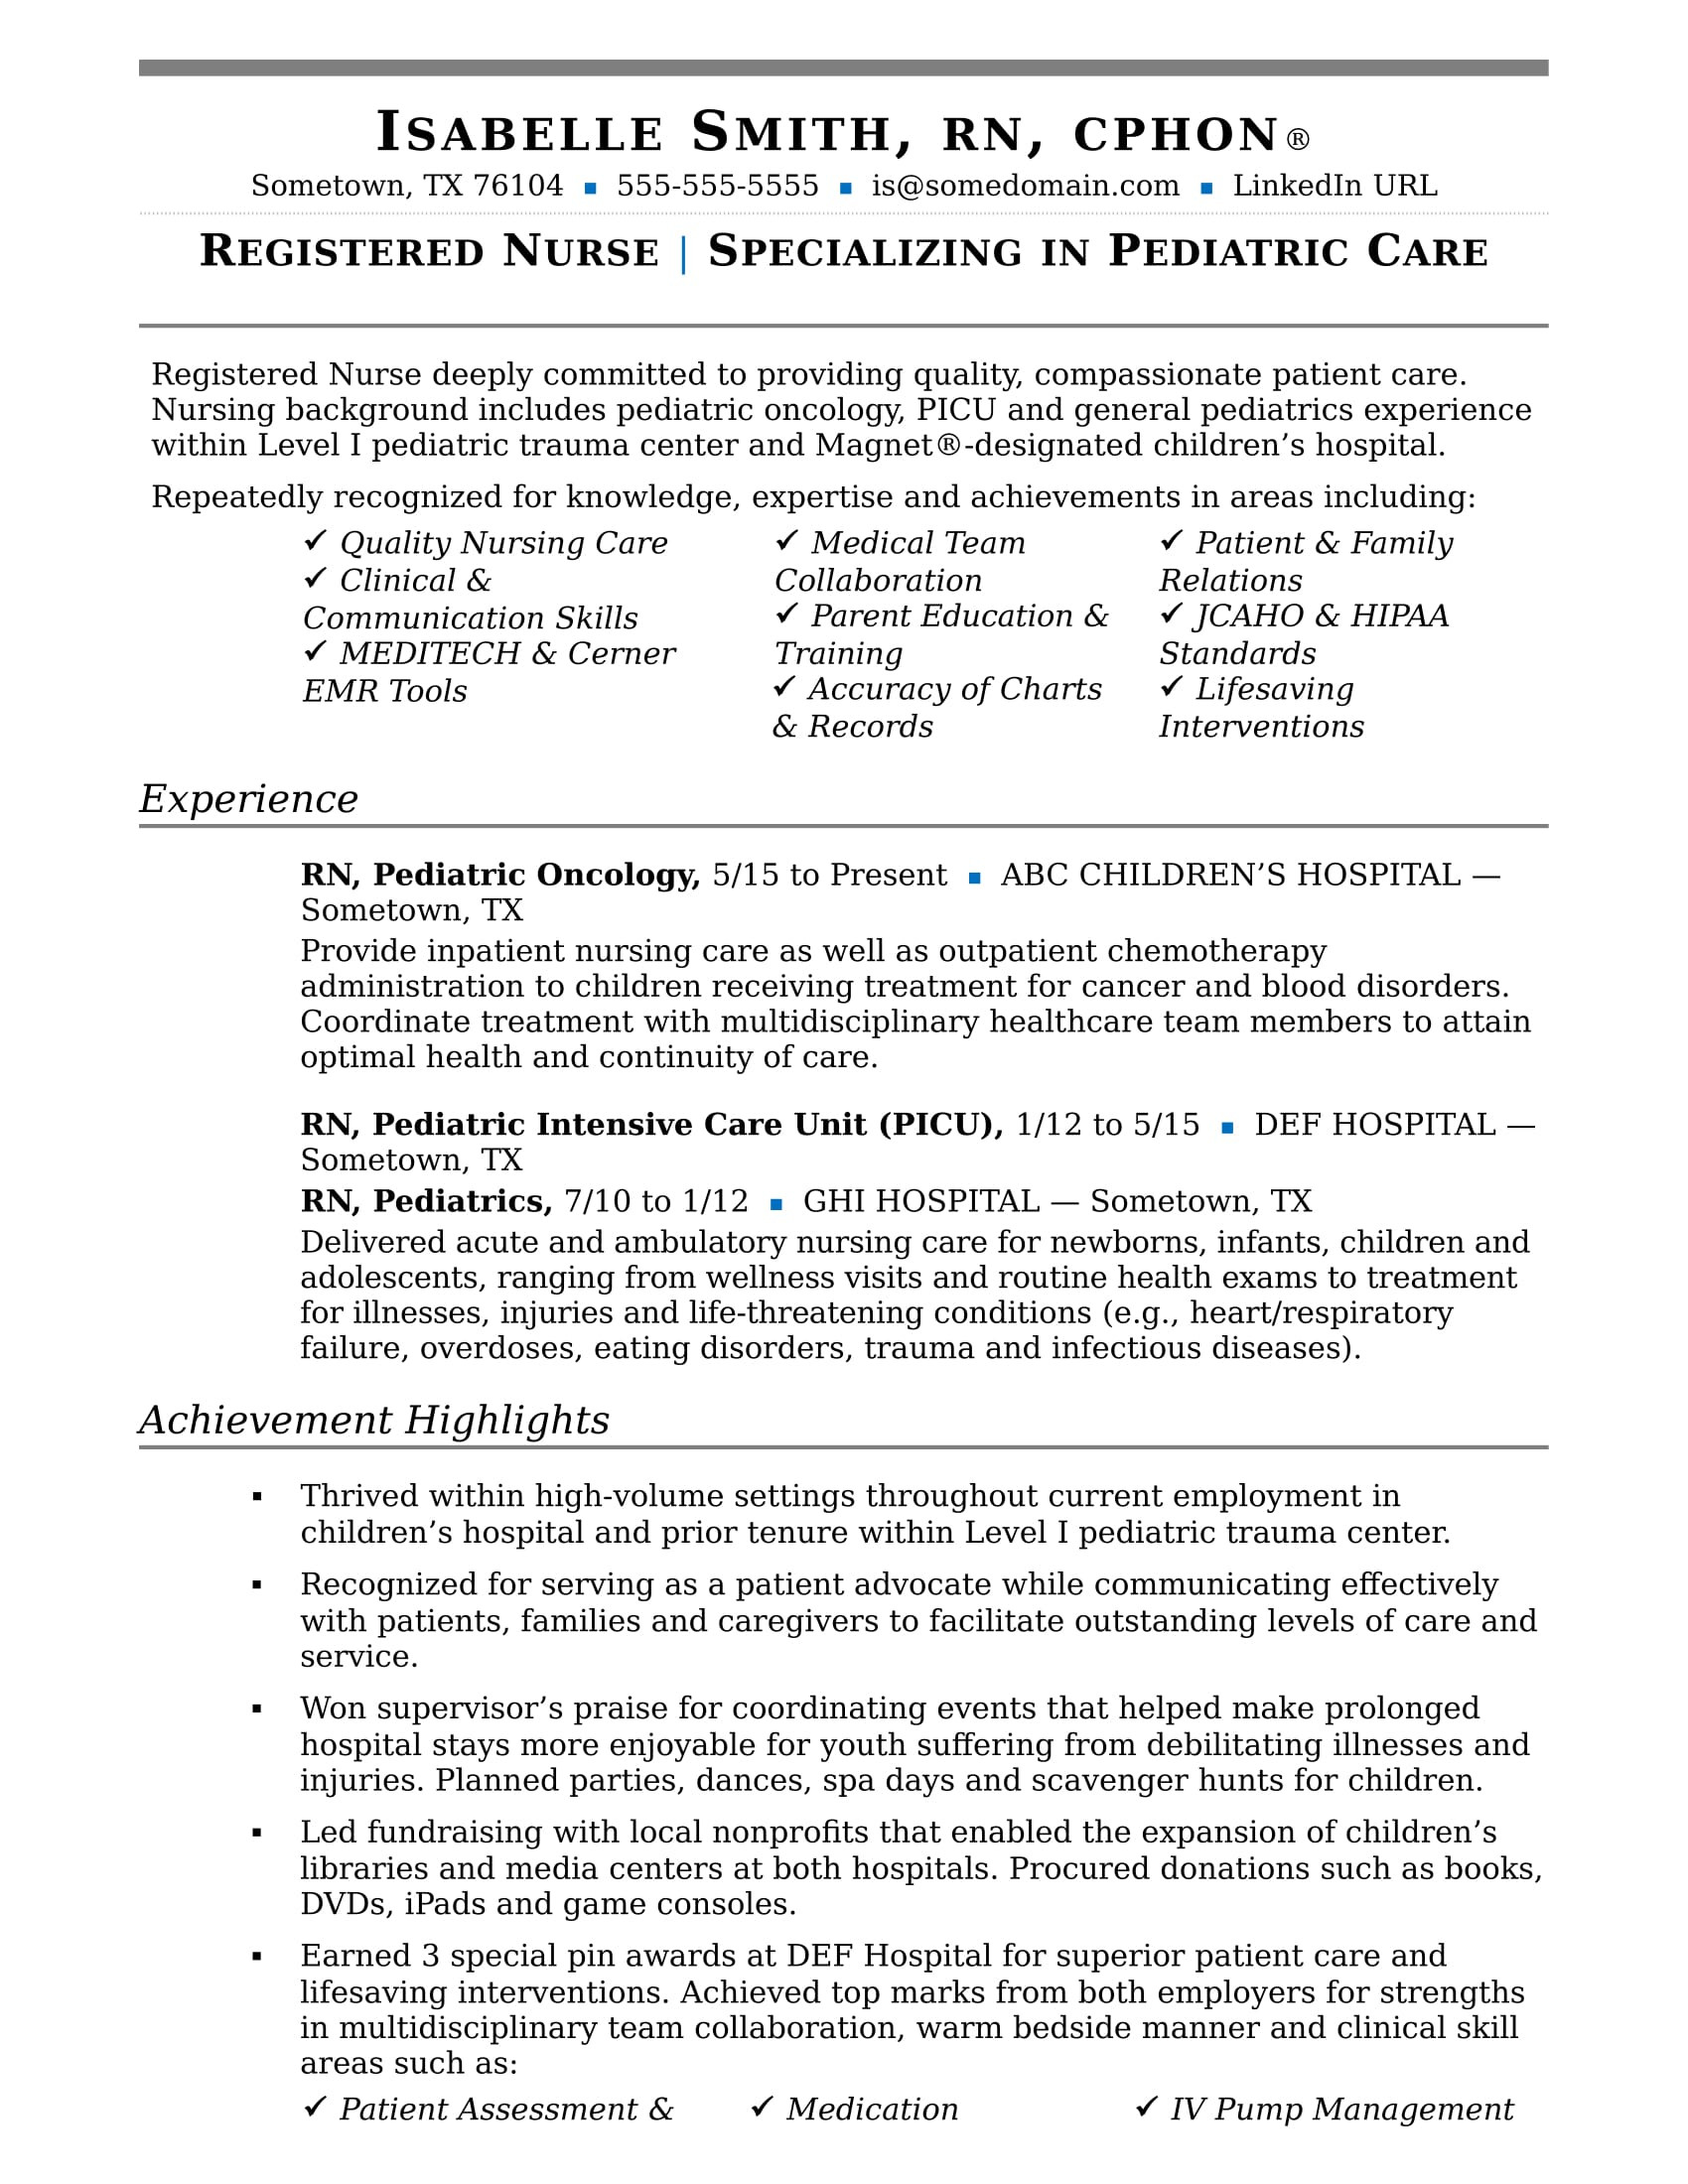 Detailed Resume Sample with Job Description for Nurses Nurse Resume Sample Monster.com